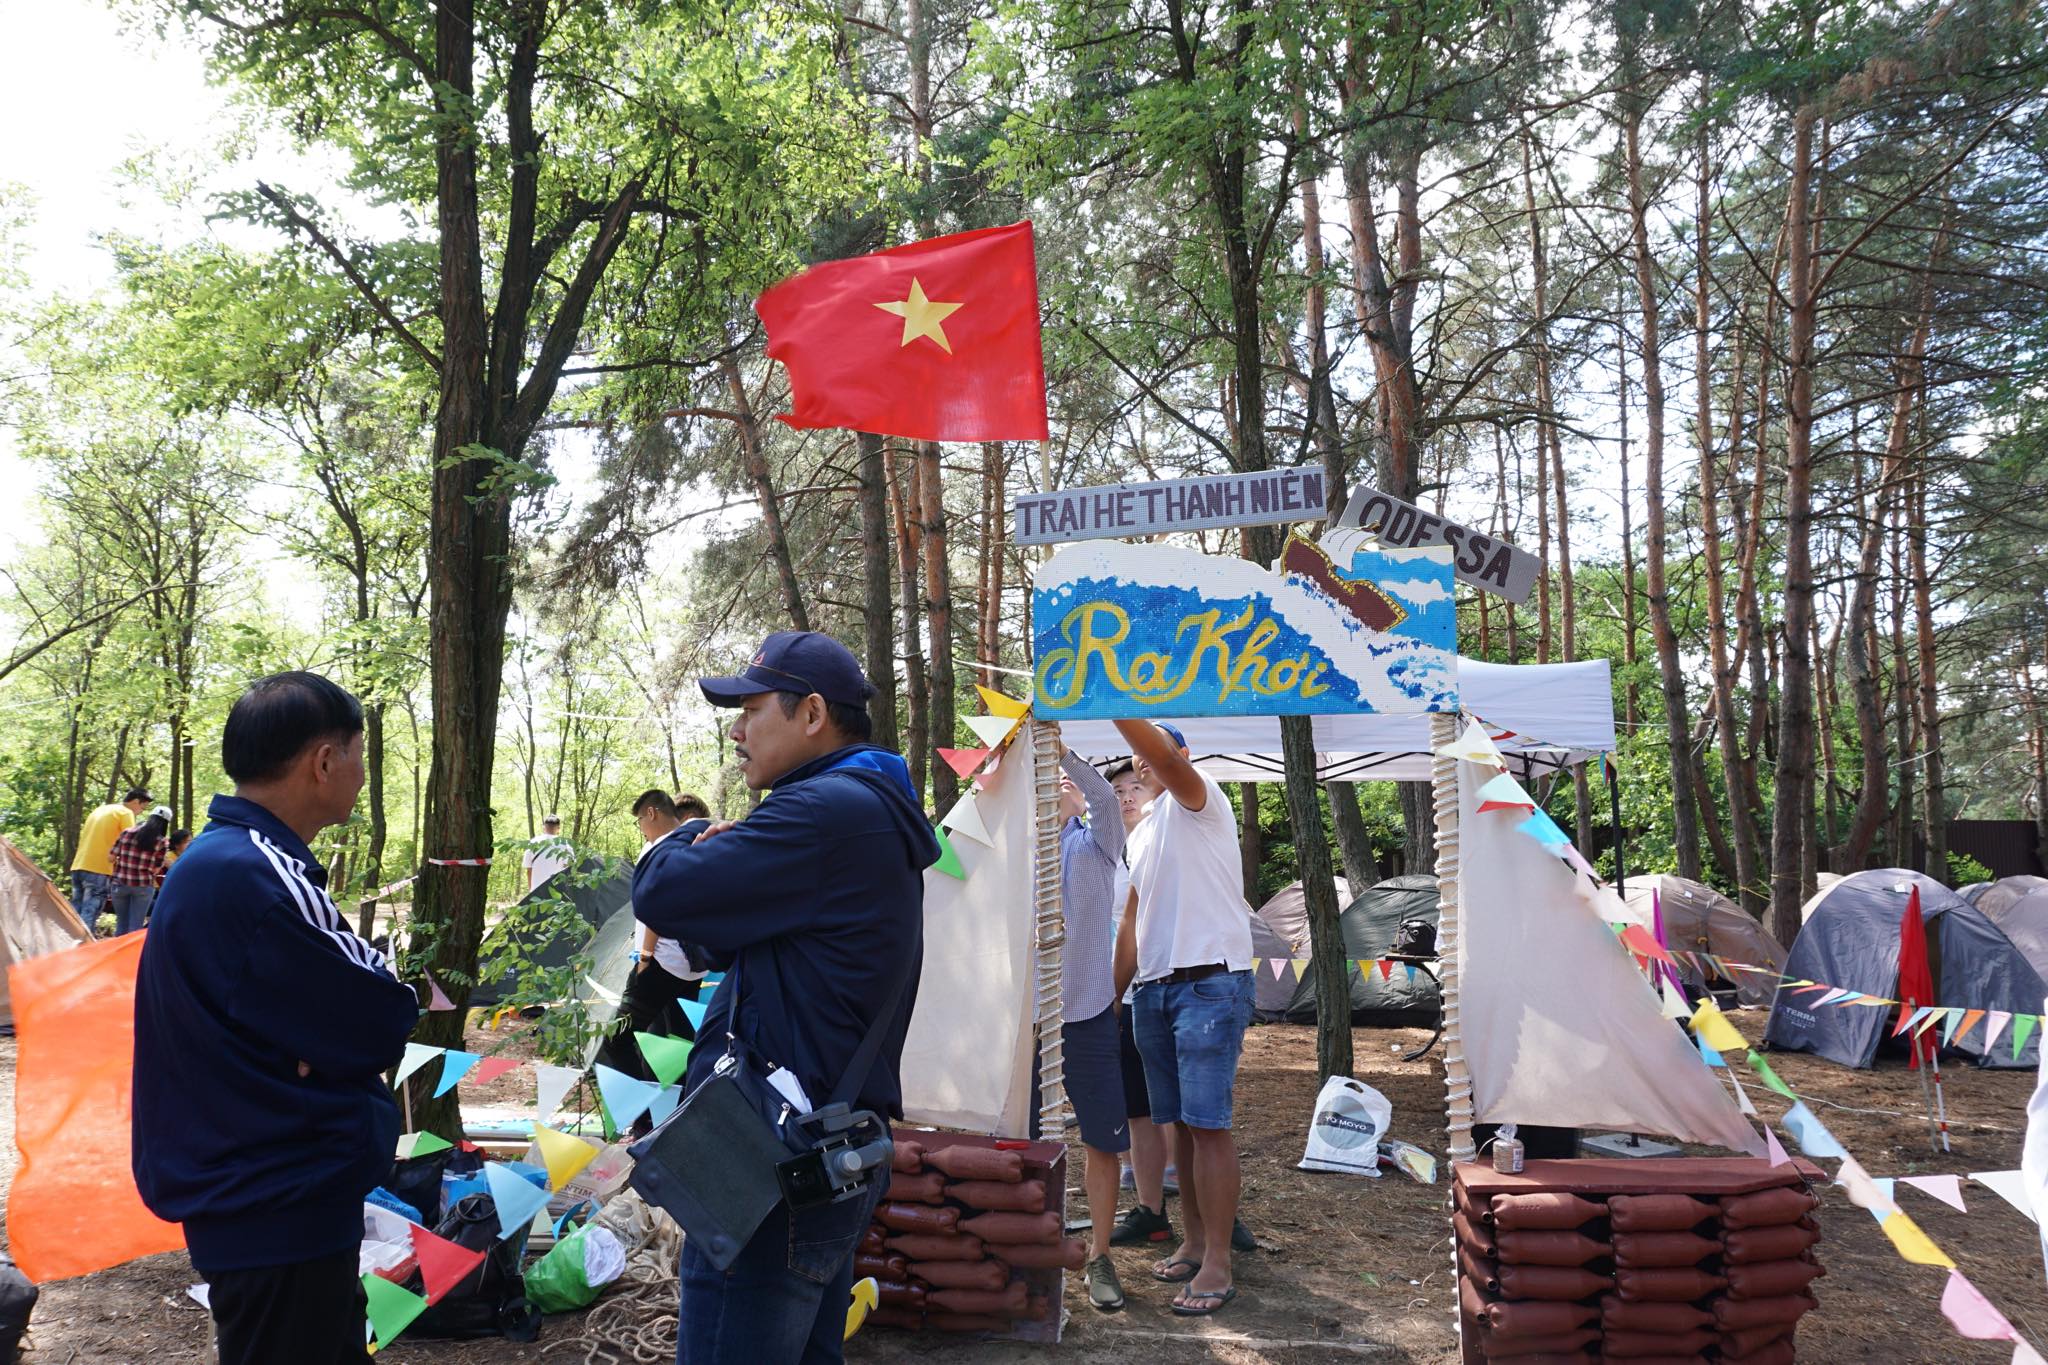 Đoàn Odessa tham dự Trạị hè toàn Ucraina 2019